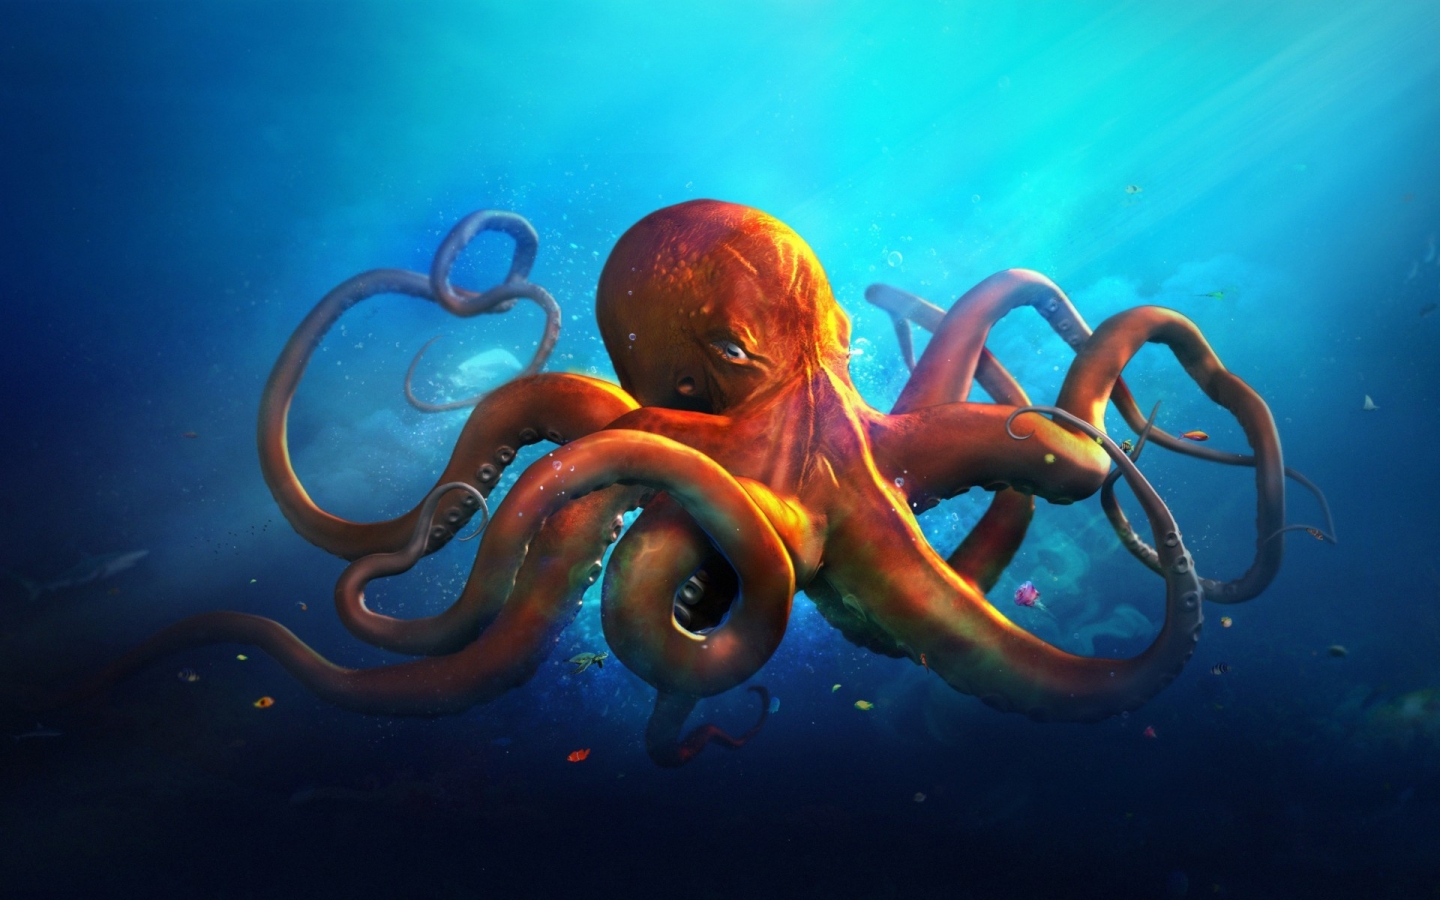 Just an Octopus for 1440 x 900 widescreen resolution